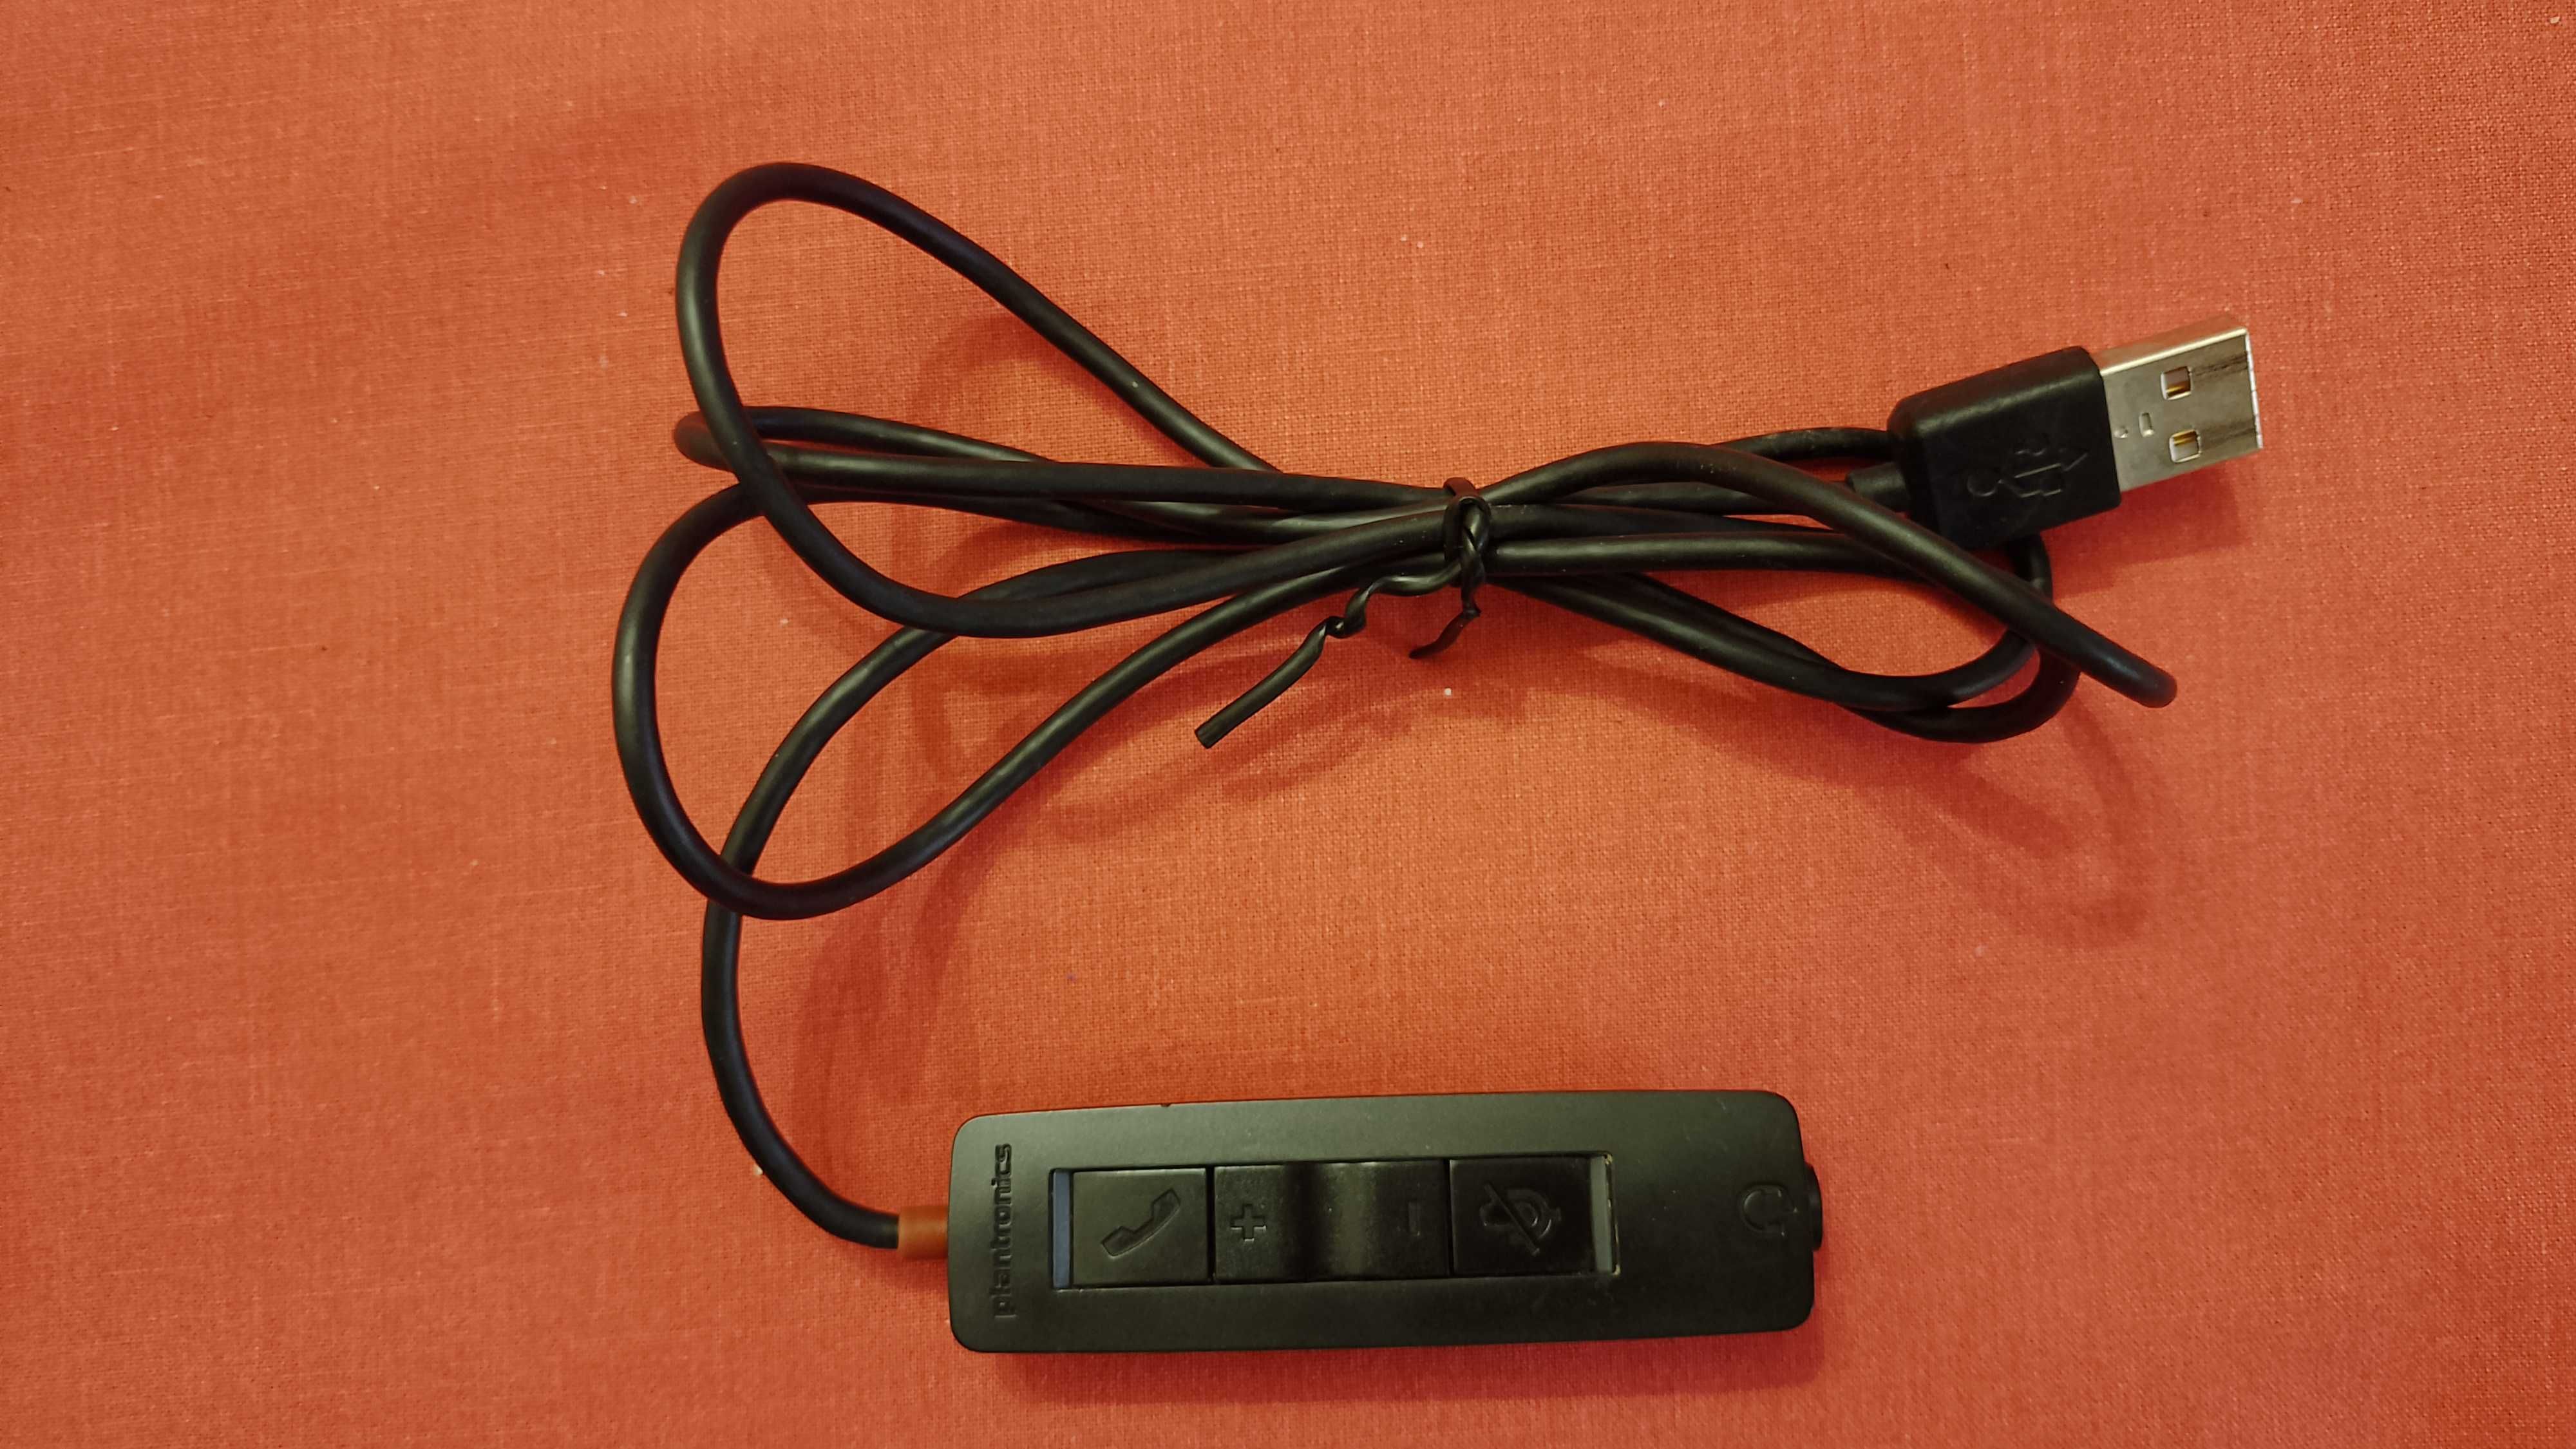 Plantronics Blackwire C325.1 300 DA Stereo USB & 3.5mm